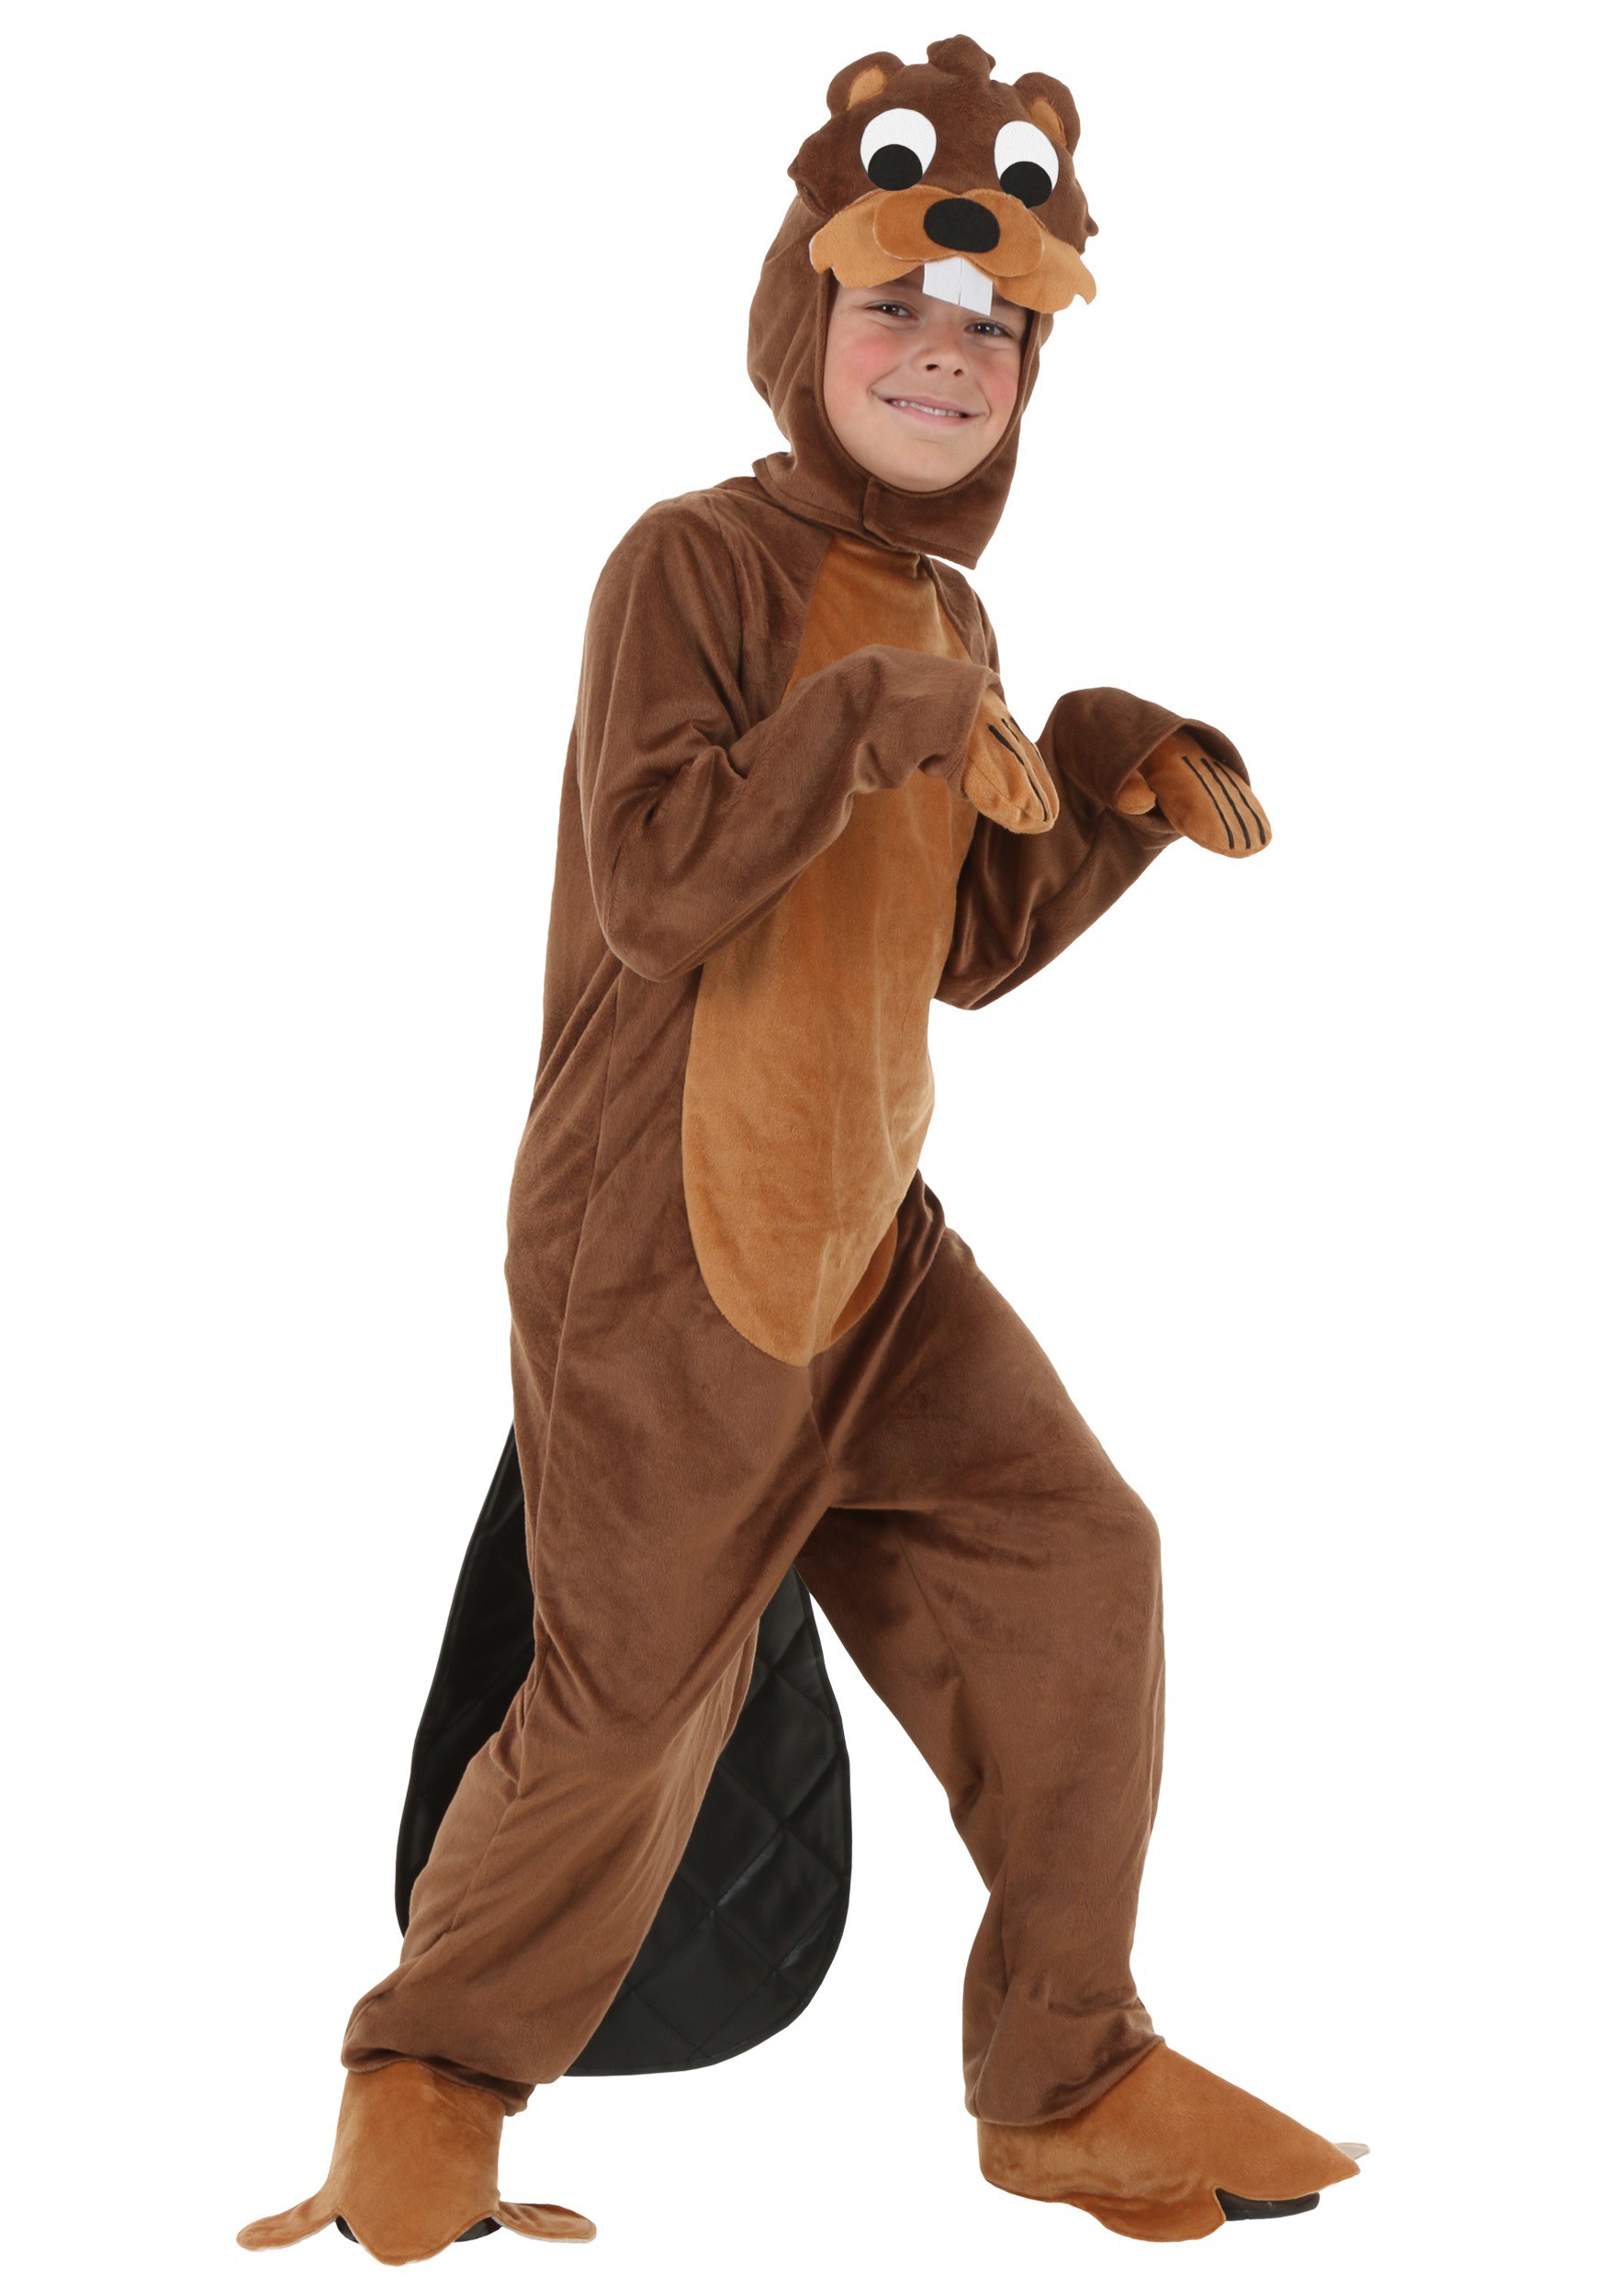 Busy Beaver Costume for Kids